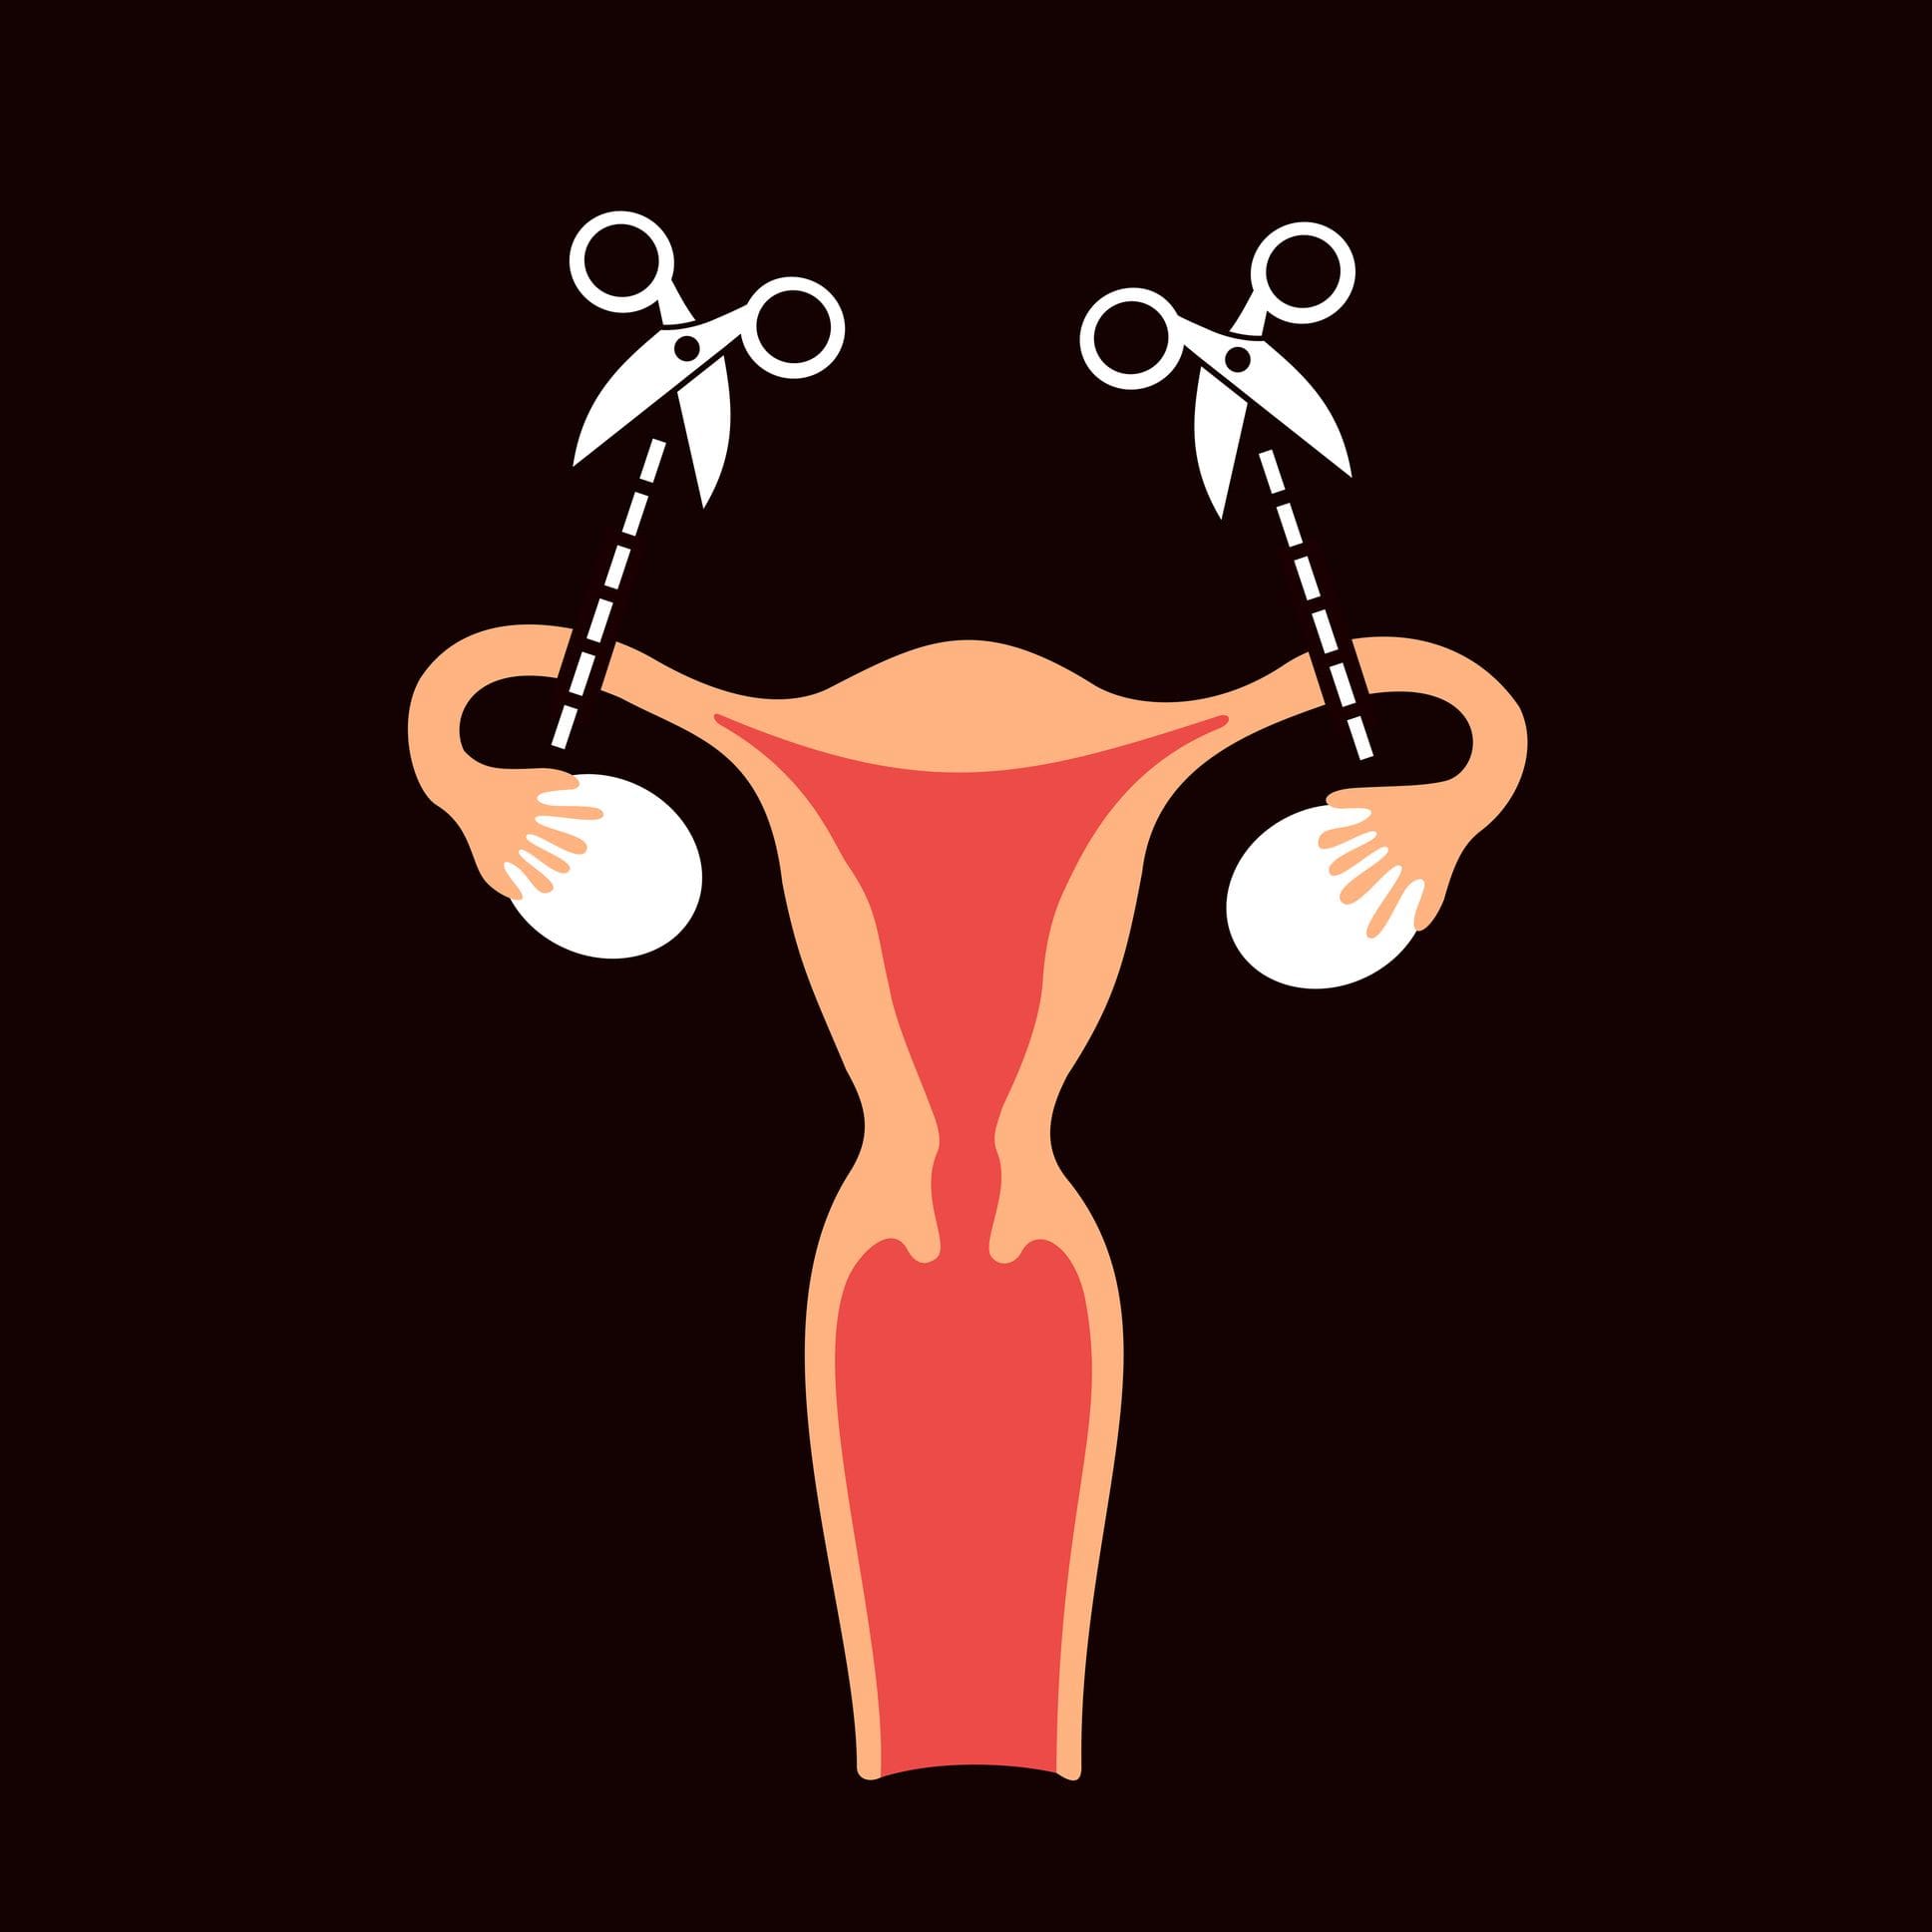 Contraception: female surgical sterilisation